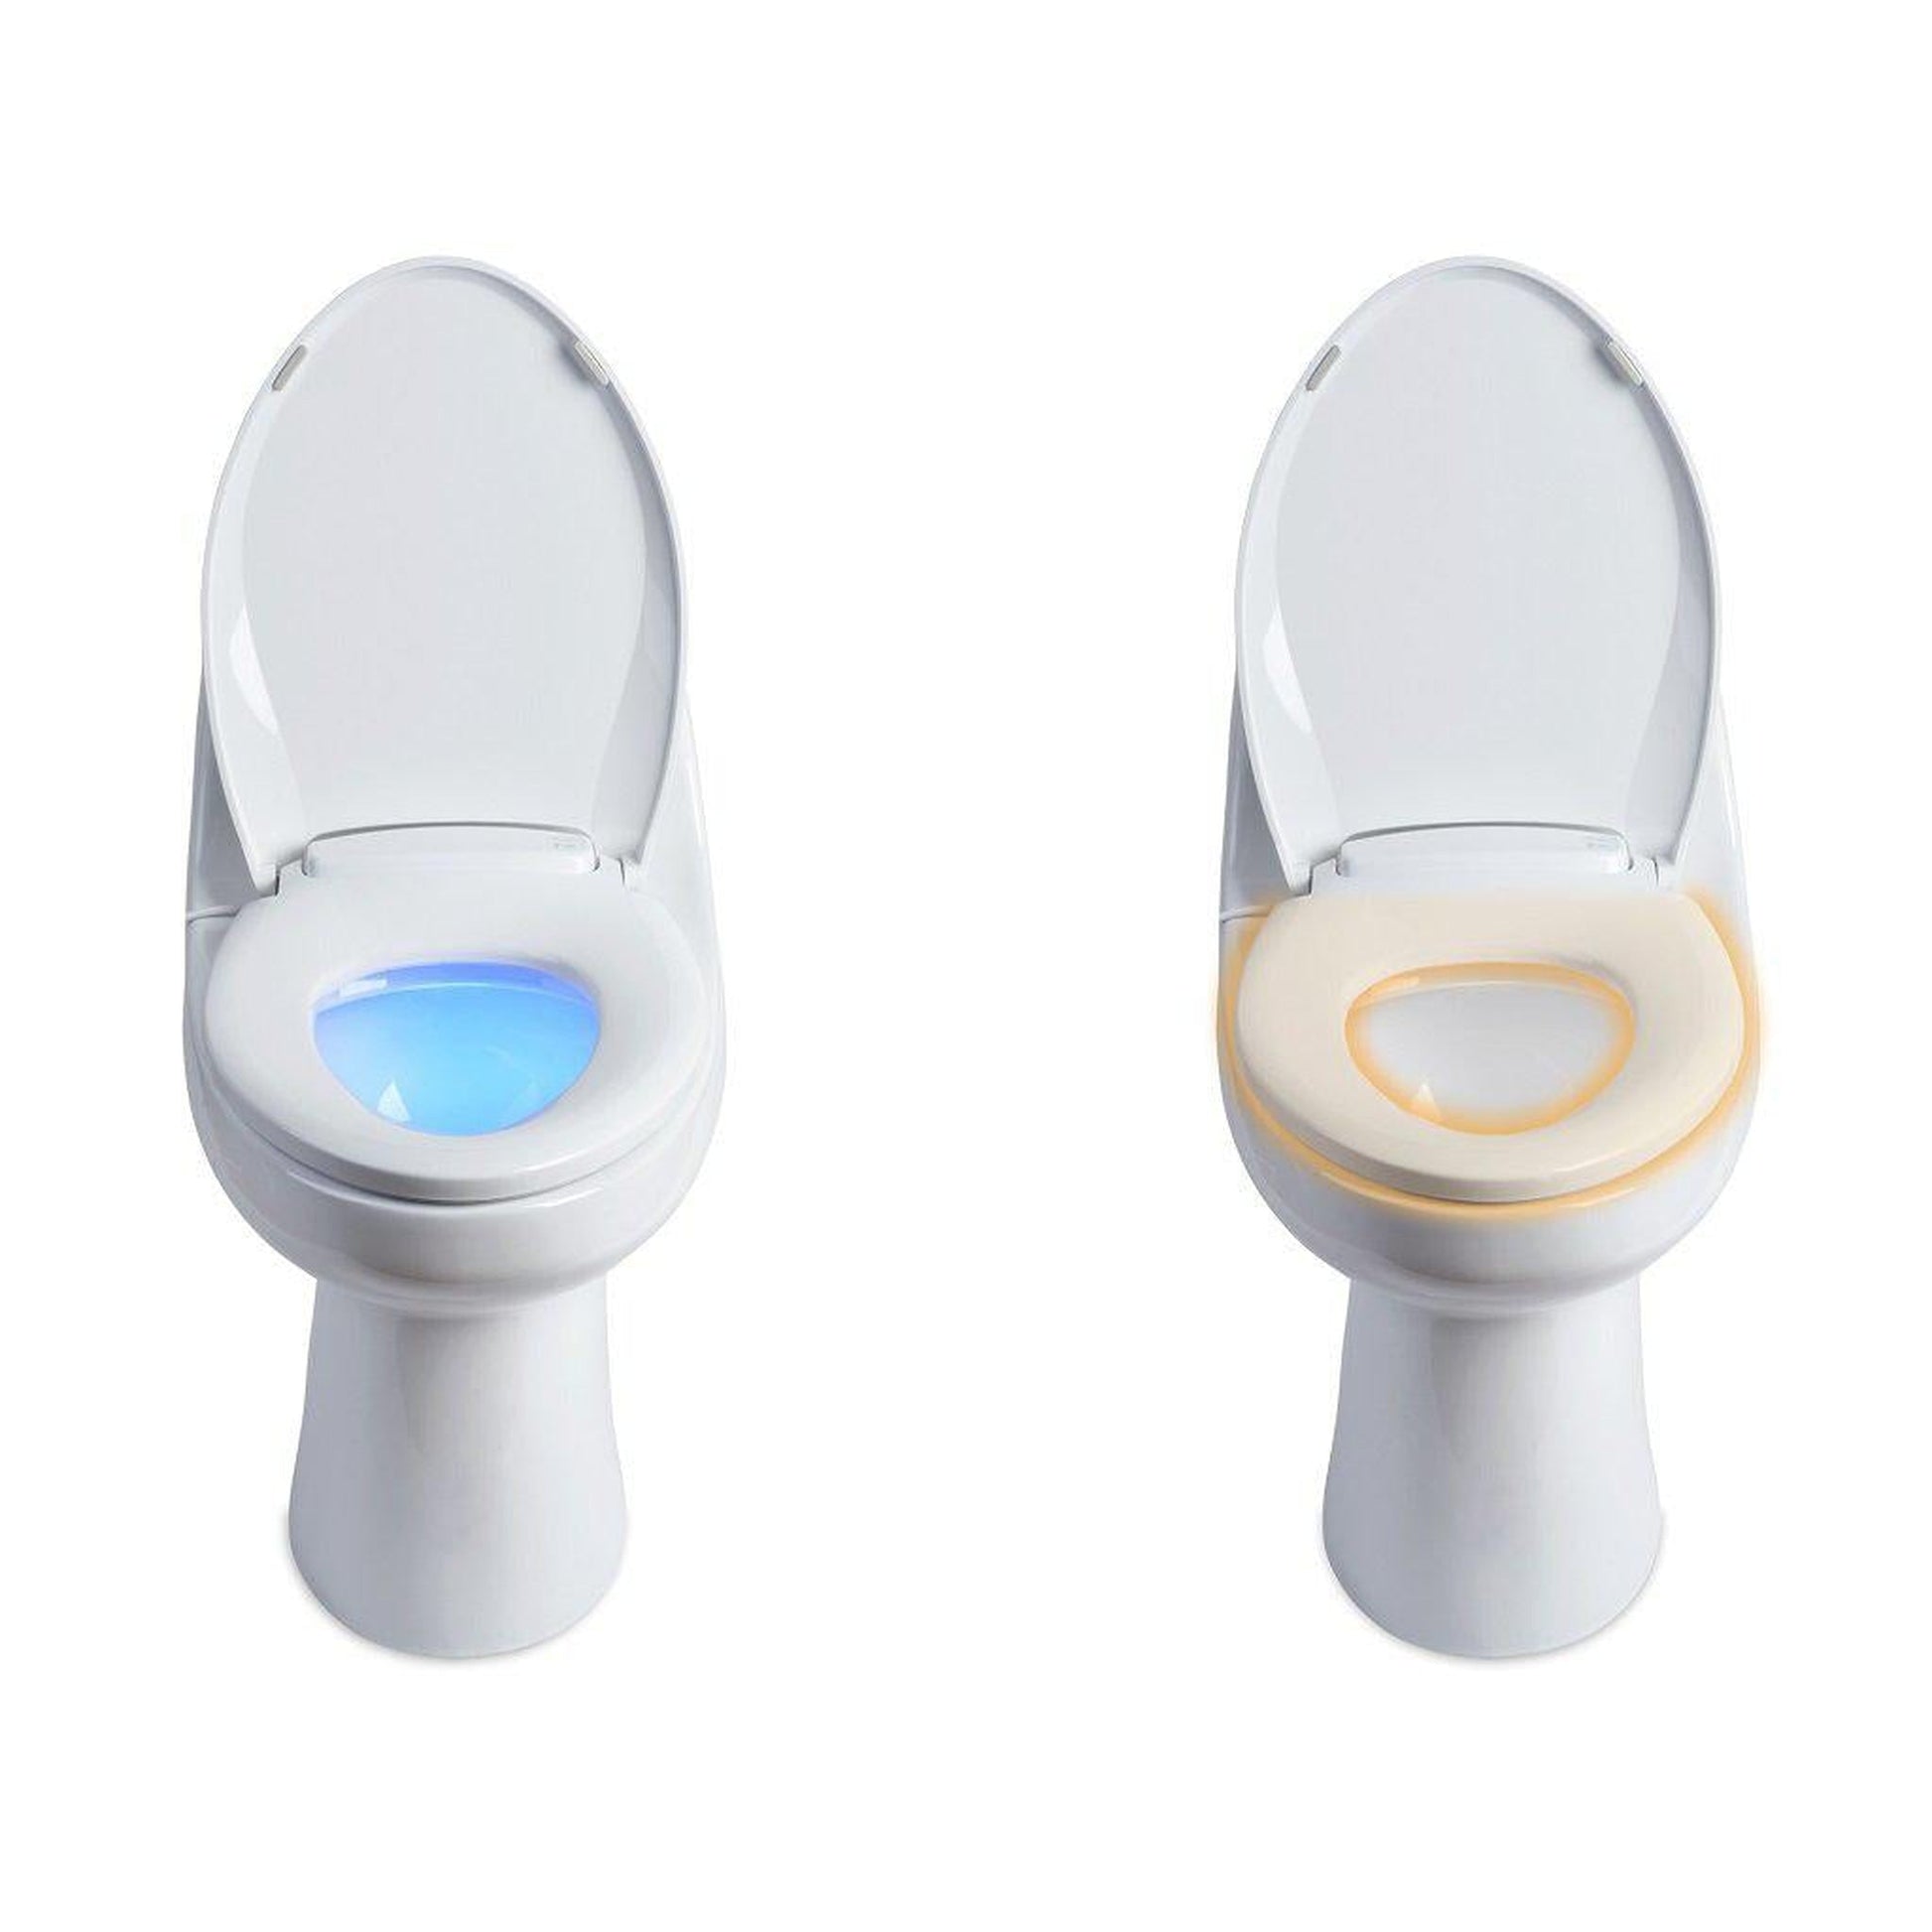 Brondell LumaWarm 18.5" White Round Electric Heated Nightlight Luxury Toilet Seat